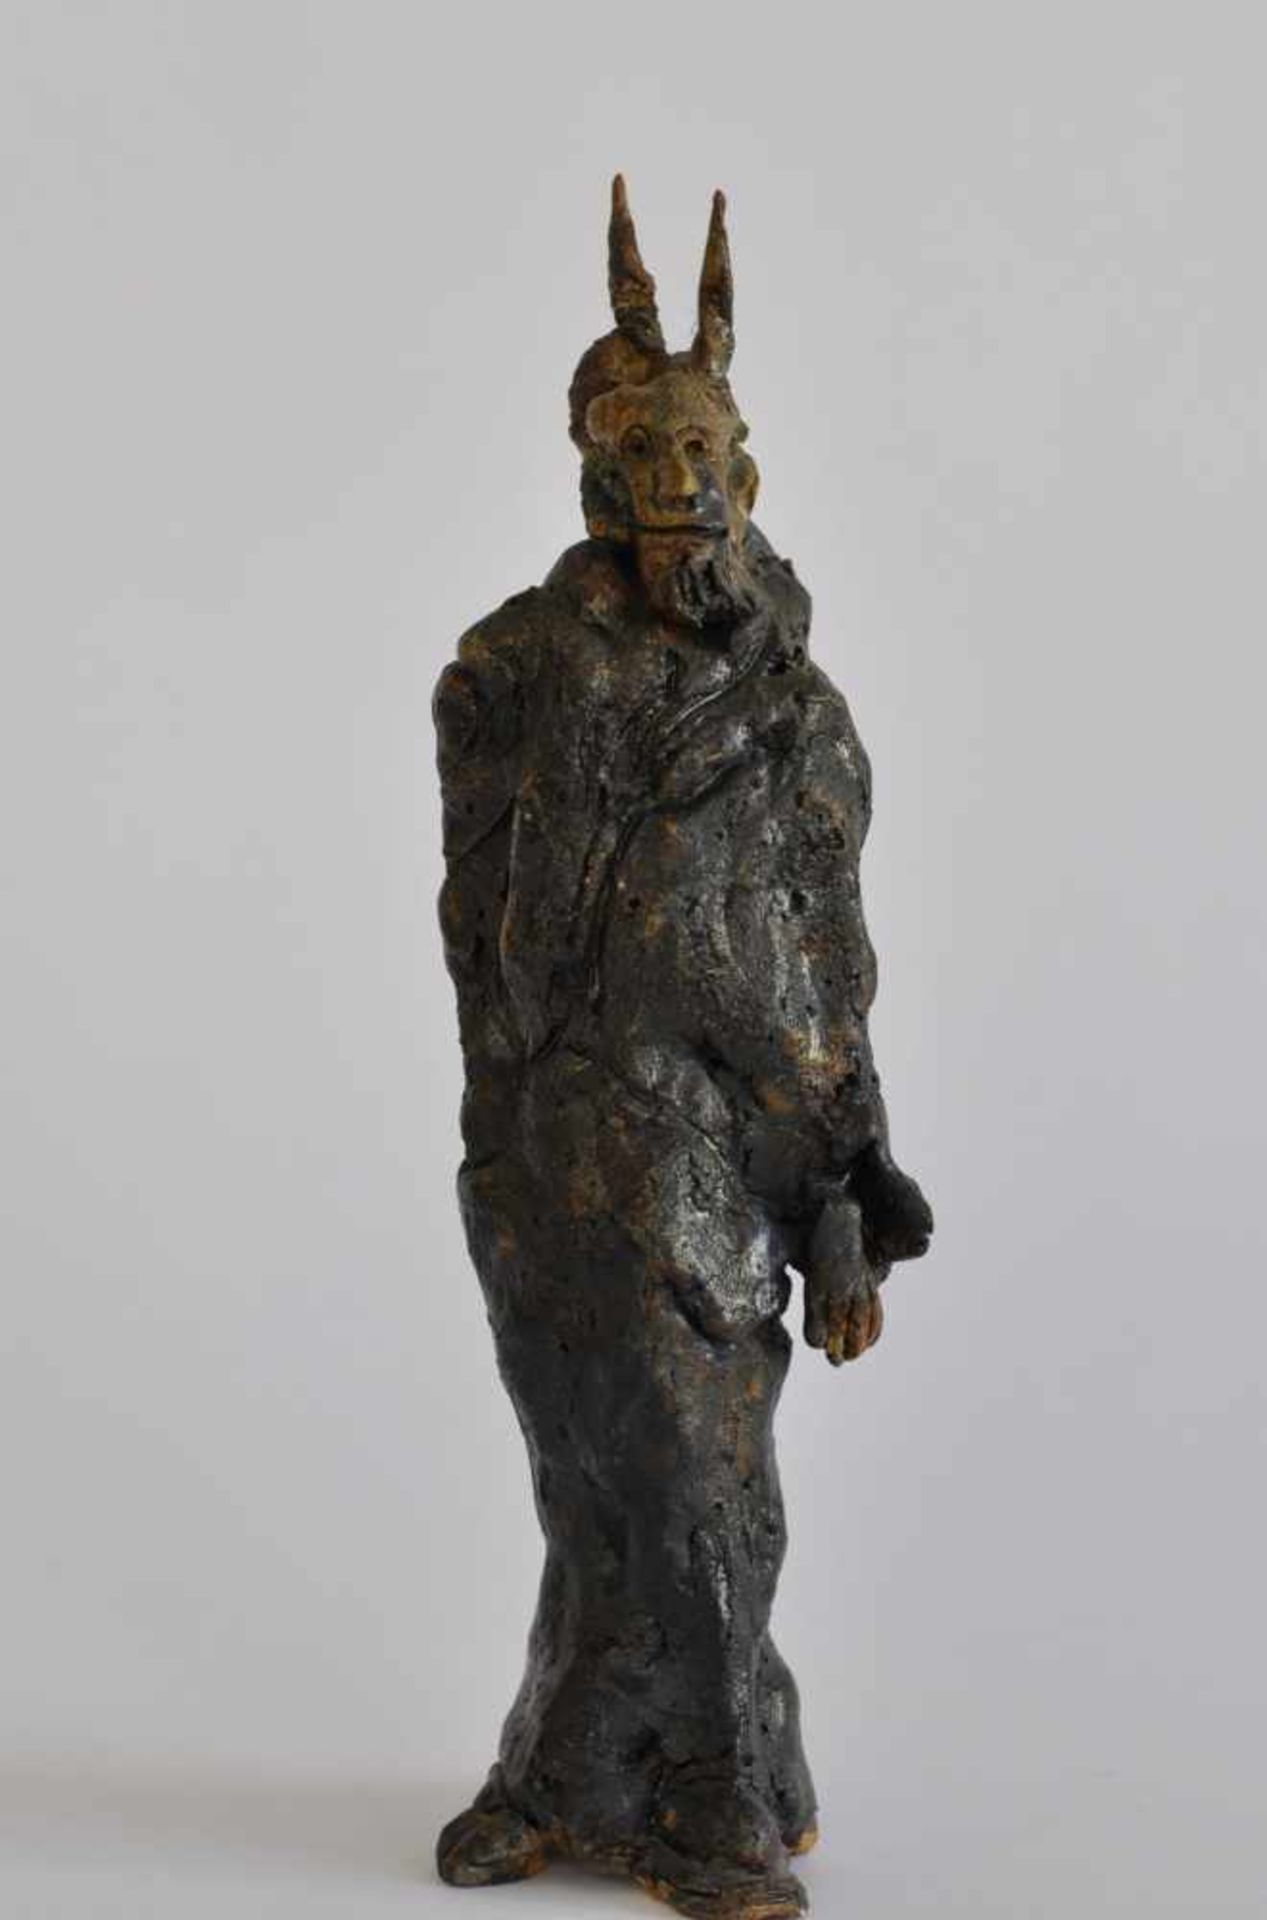 POMPETZKI, Klemens (*1932 Masuren), Studiokeramik, Skulptur, "Mephisto", Ton, blau-grau